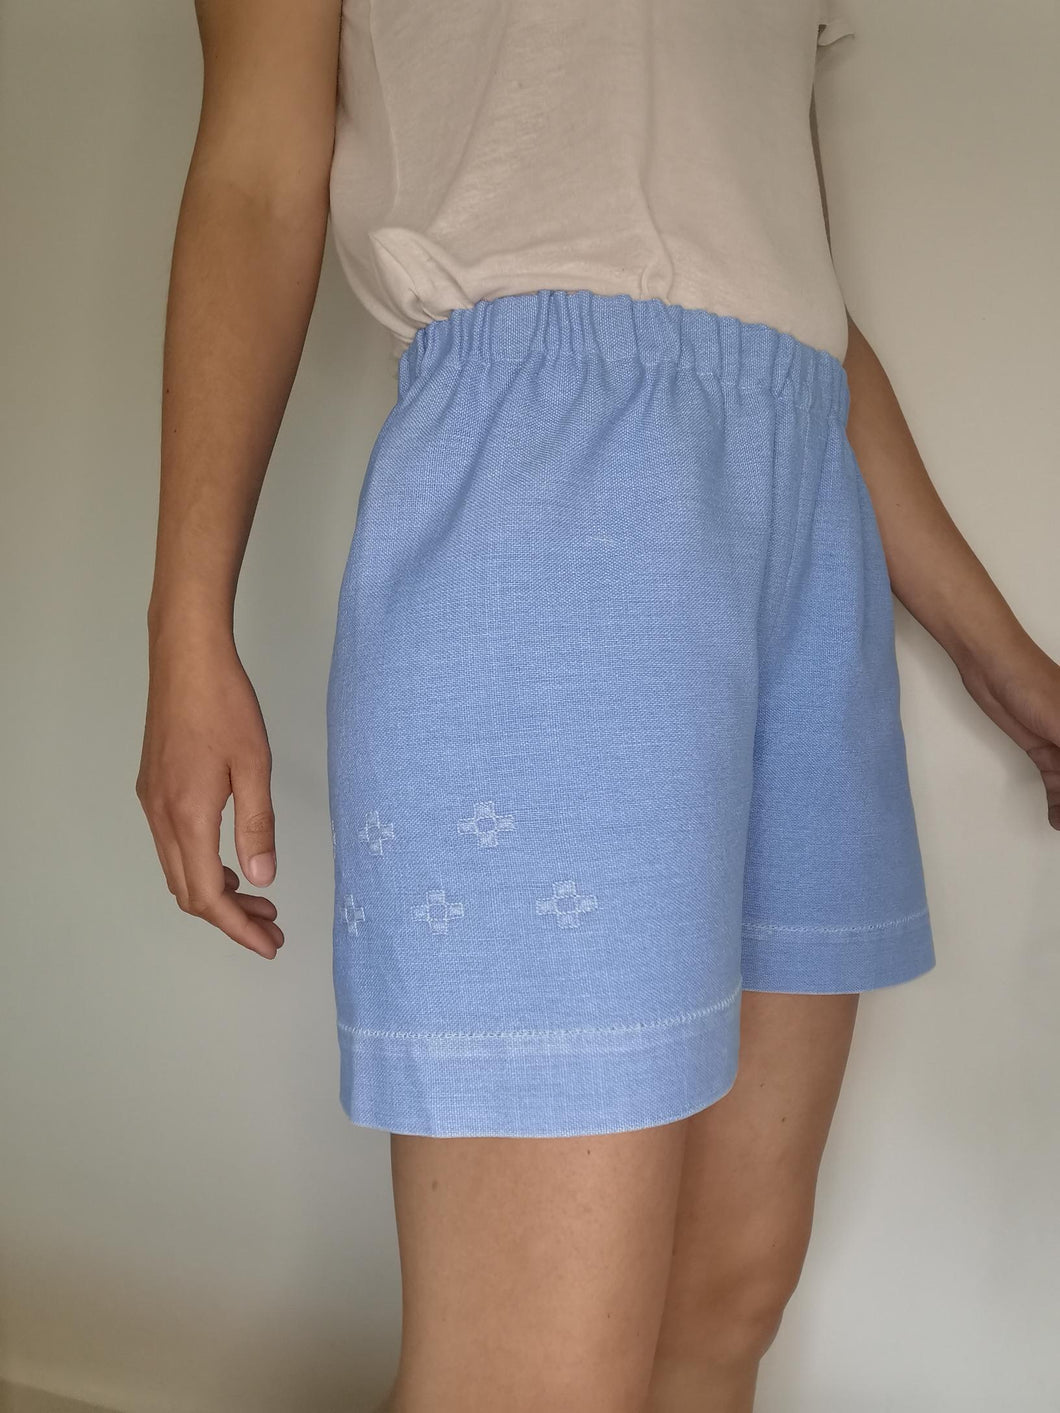 Shorts, lyseblå med håndlavede detaljer- str. S/M